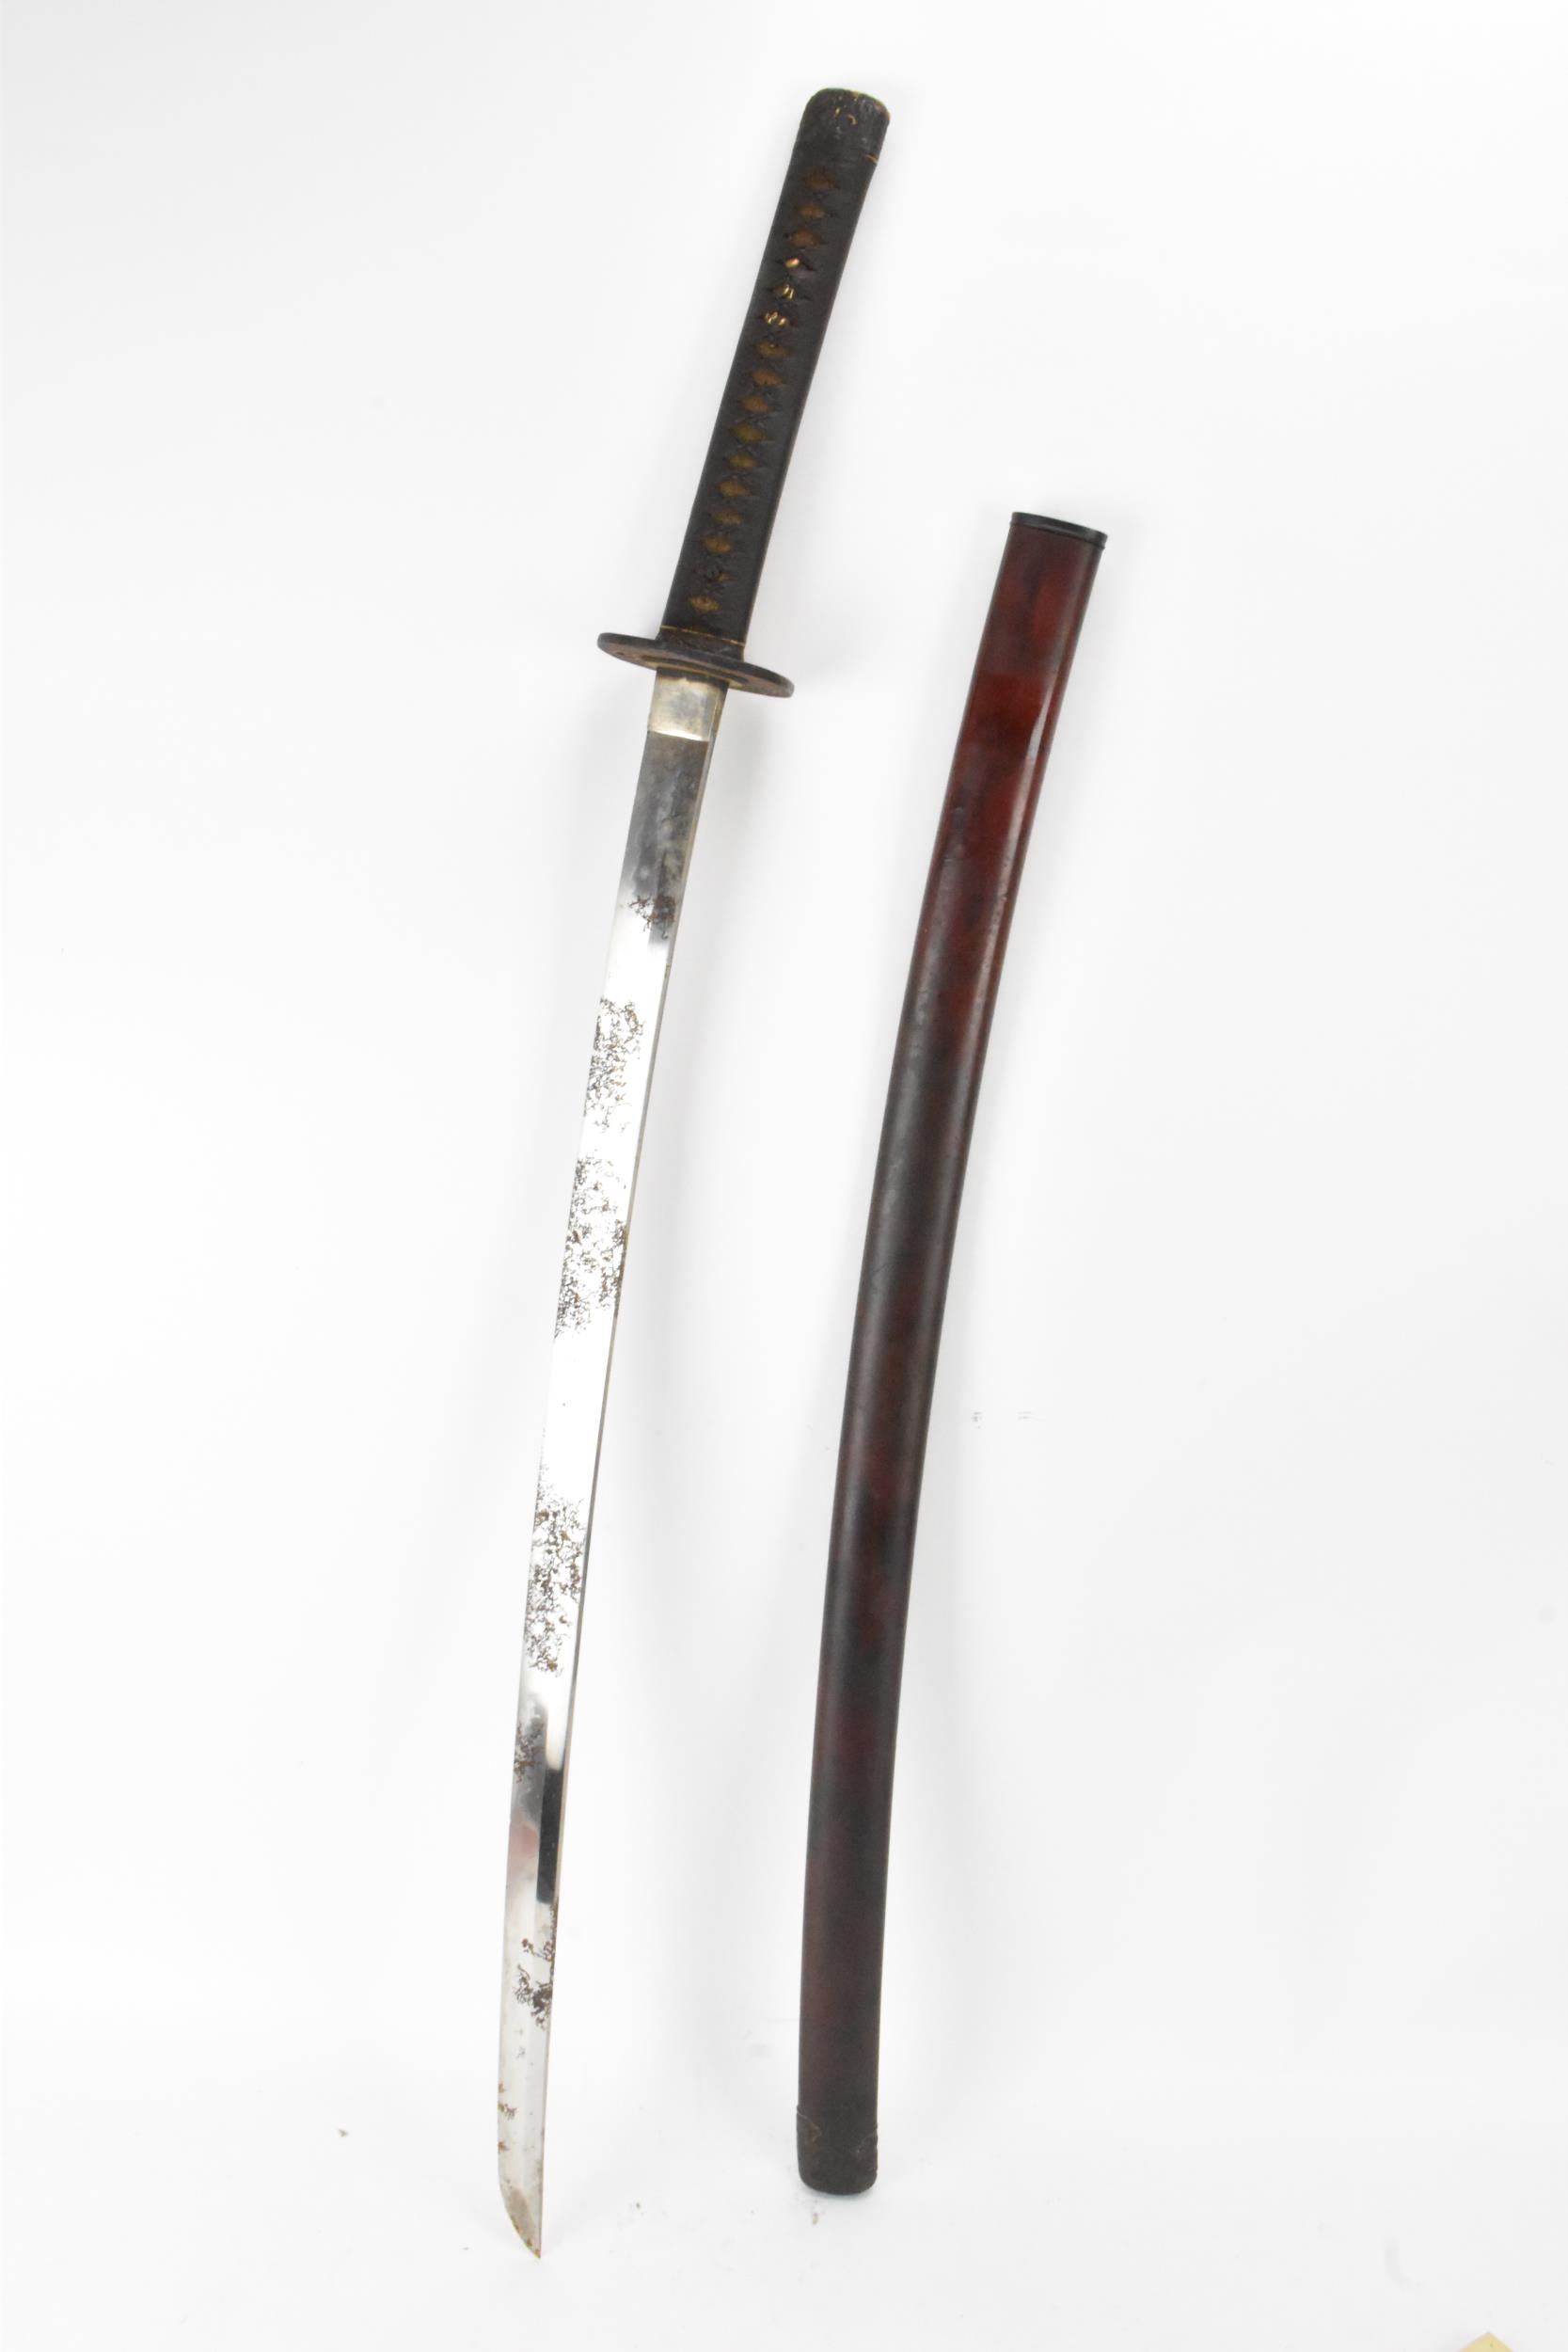 A Japanese Edo period, Inshu ju Kanetsugu saku sword, late 17th/early 18th century, made by